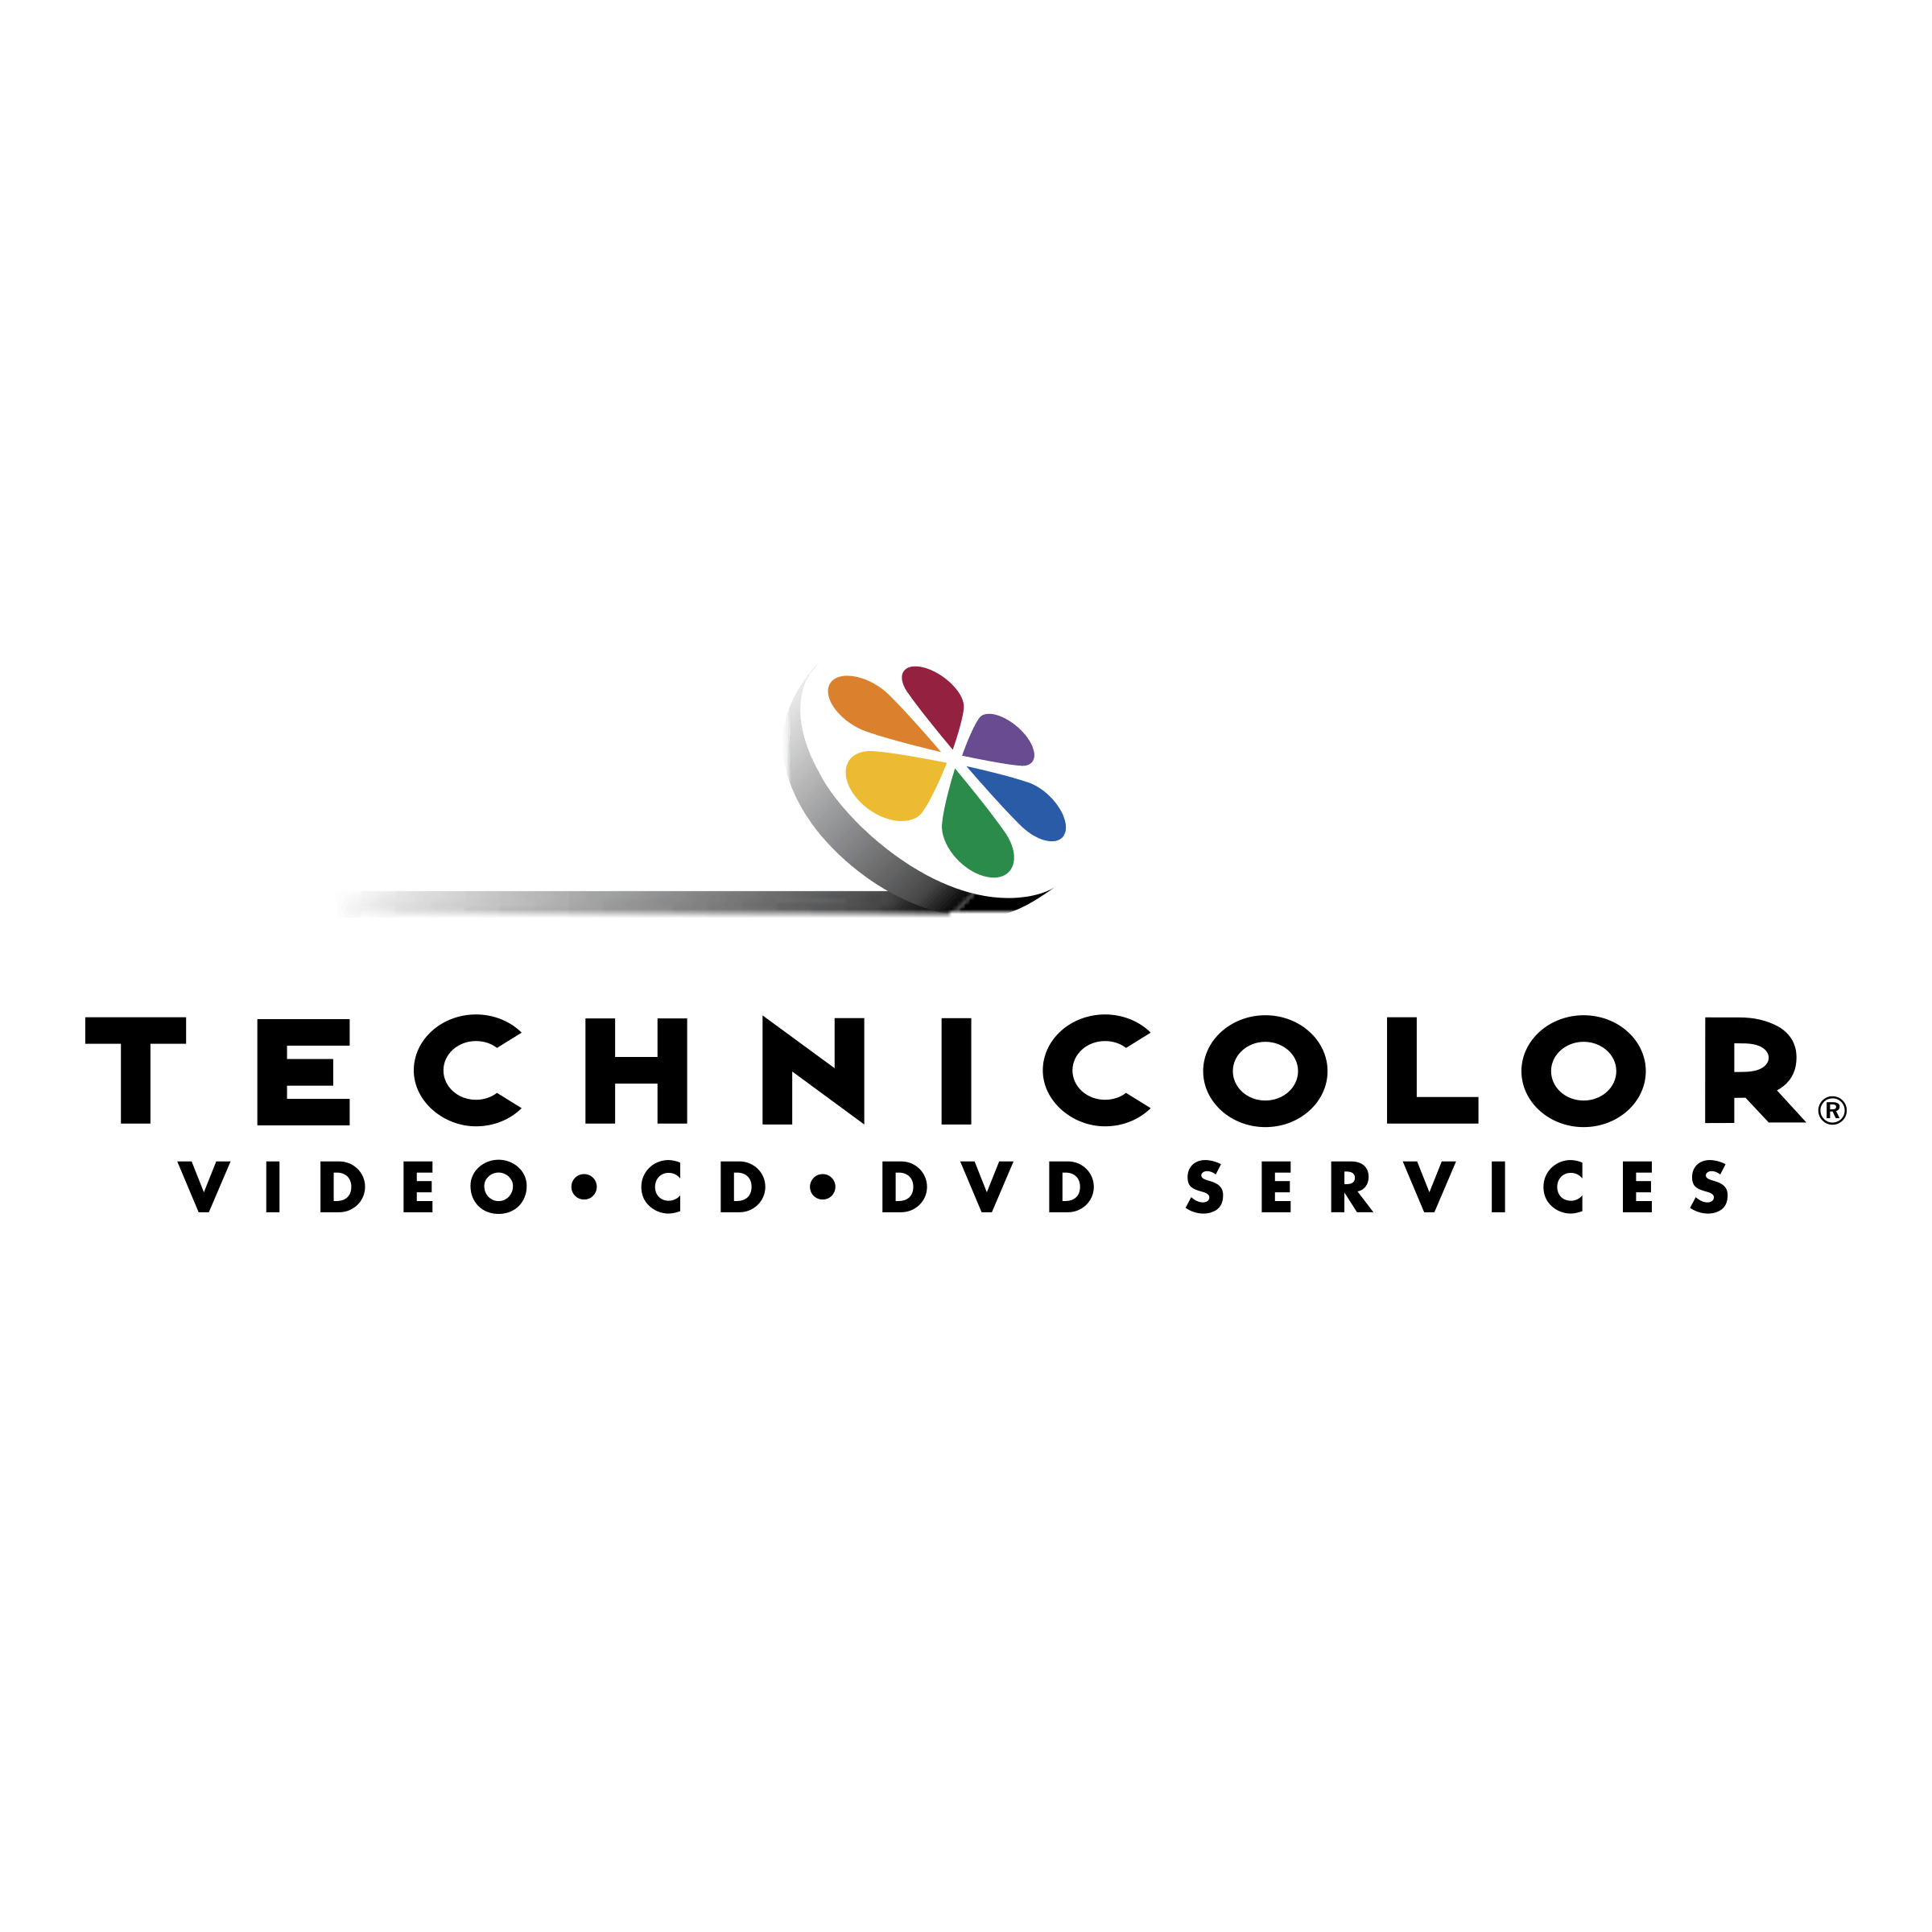 Technicolor Logo - Technicolor Logo PNG Transparent & SVG Vector